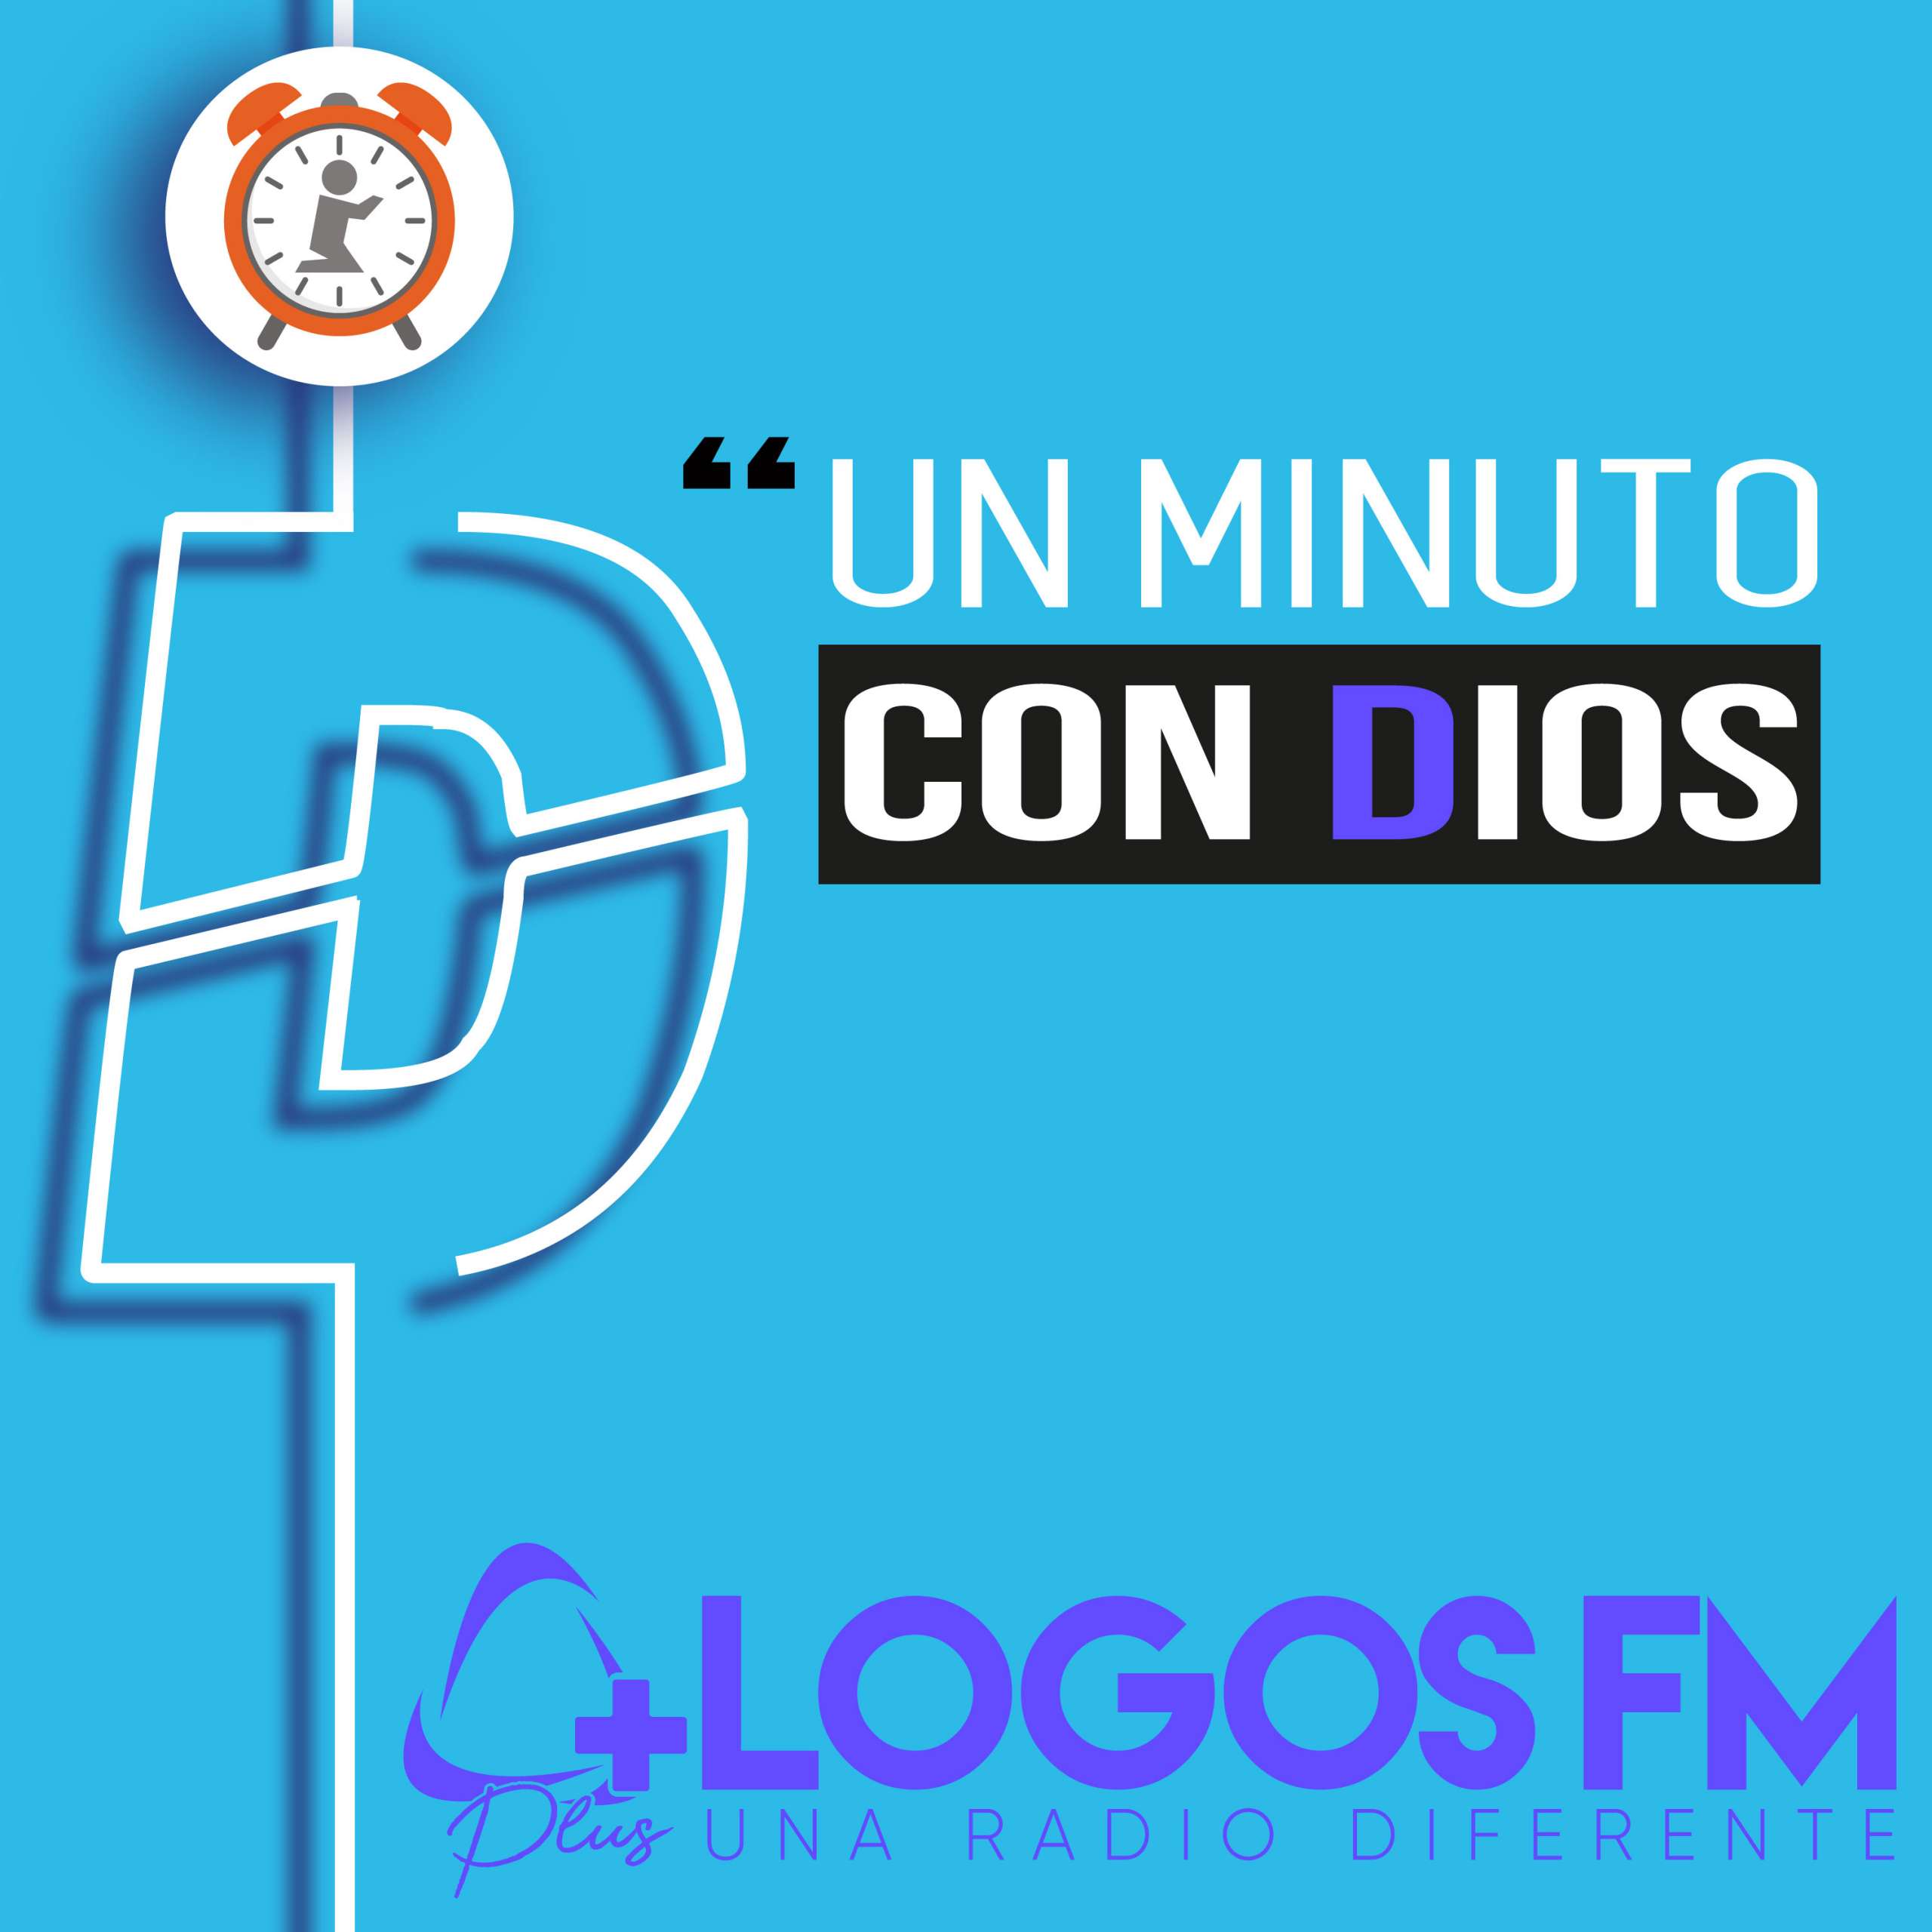 Un minuto con Dios - Episodio 429 - Loida Vargas